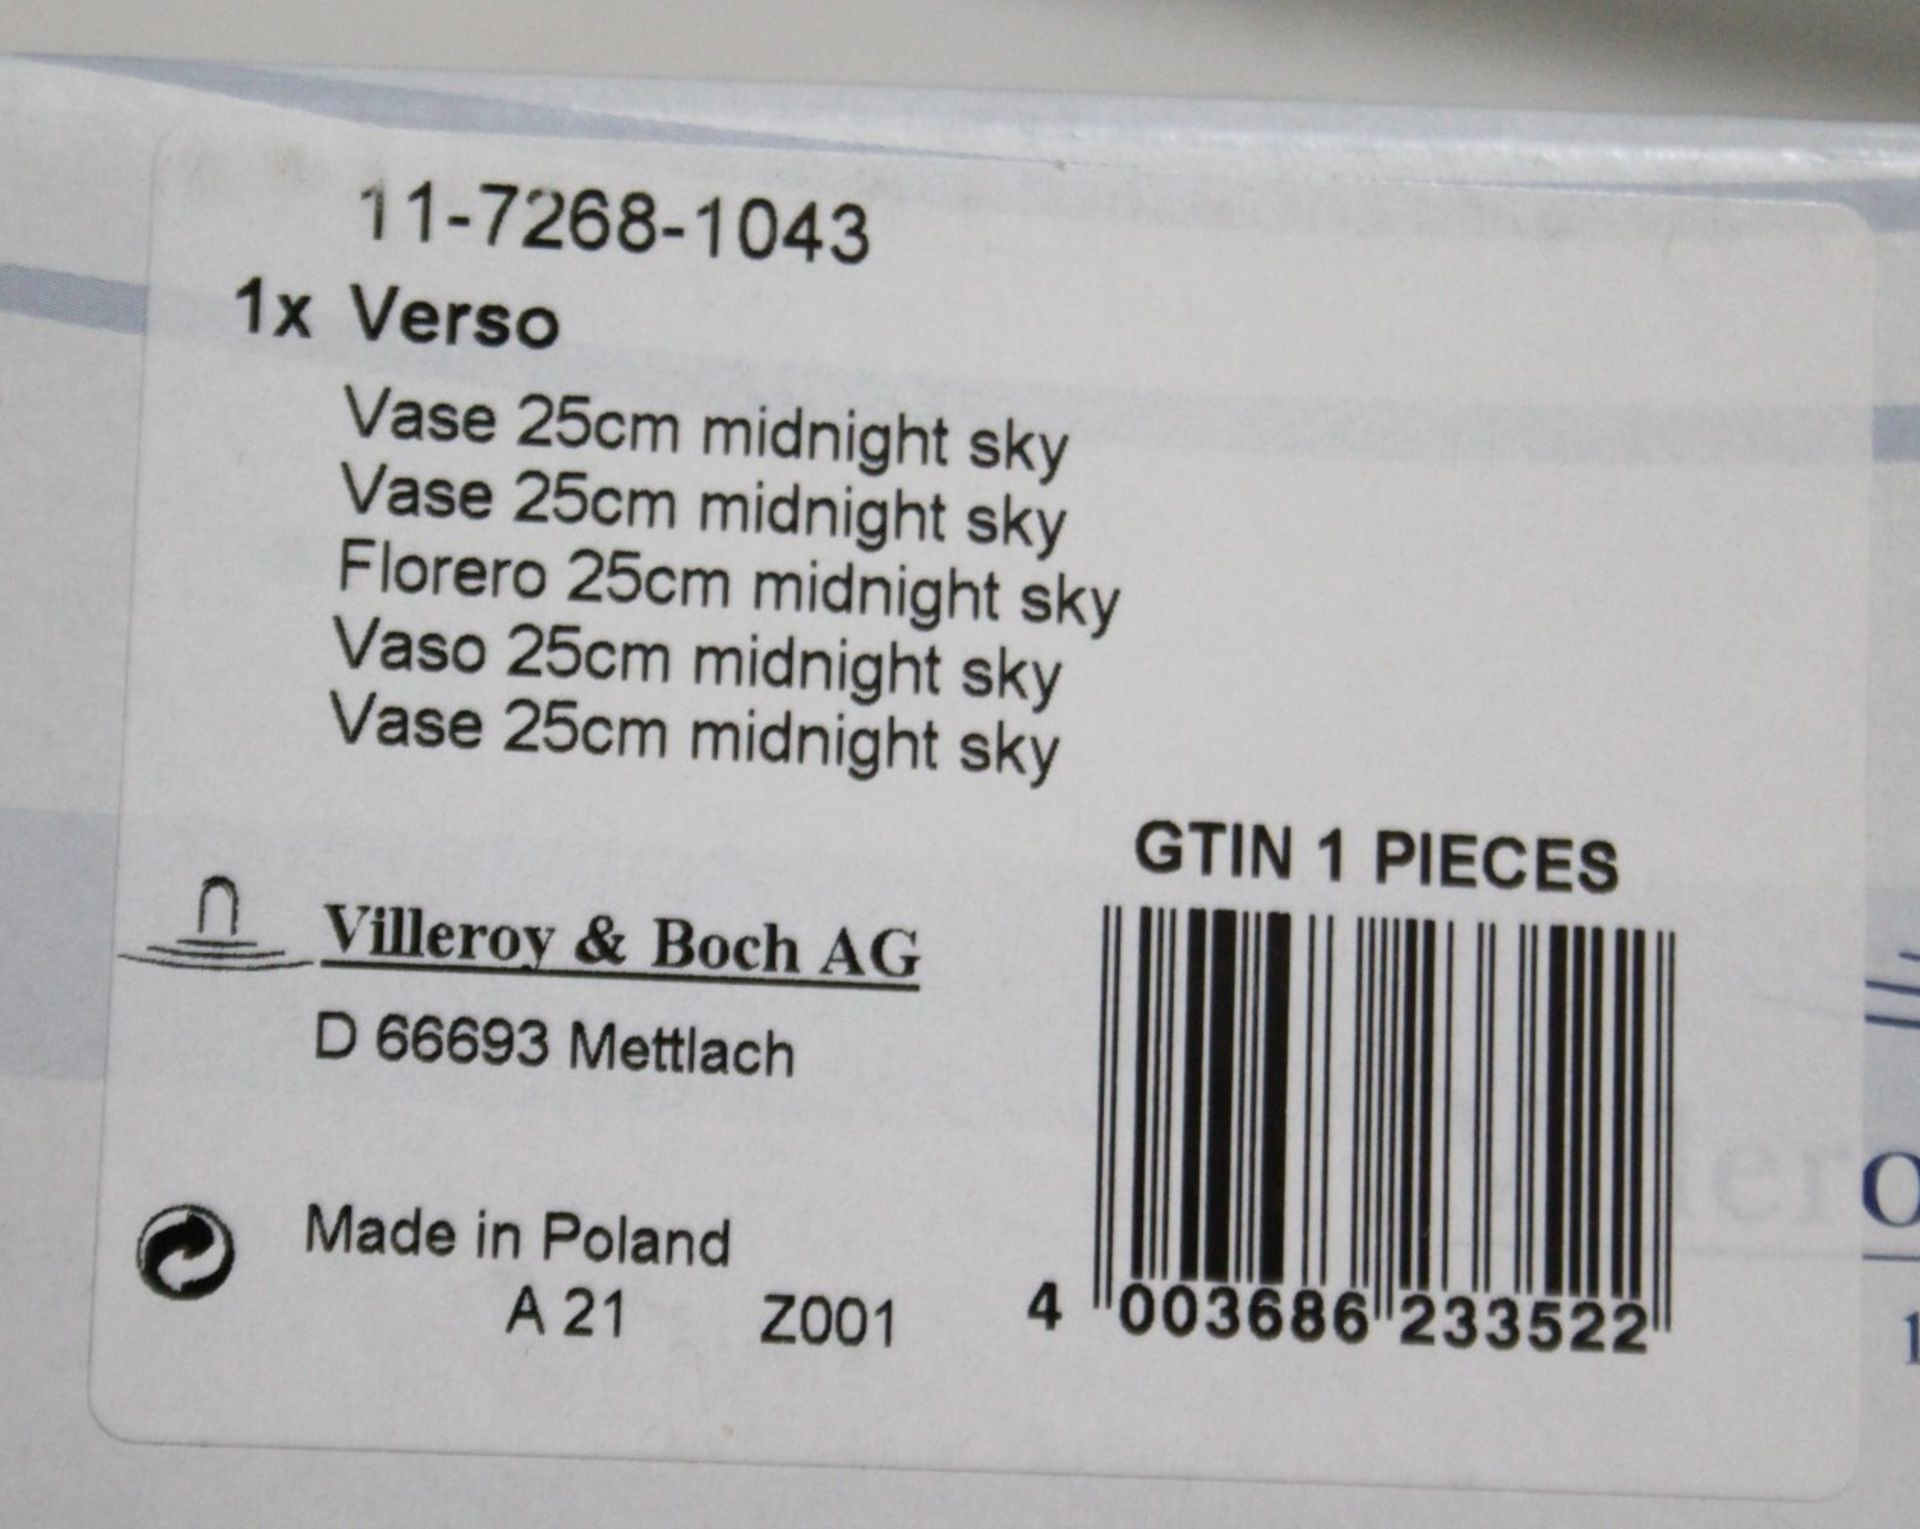 1 x VILLEROY & BOCH 'Verso' Glass Vase Midnight Sky (25cm) - Original Price £72.90 - Boxed Stock - Image 6 of 8